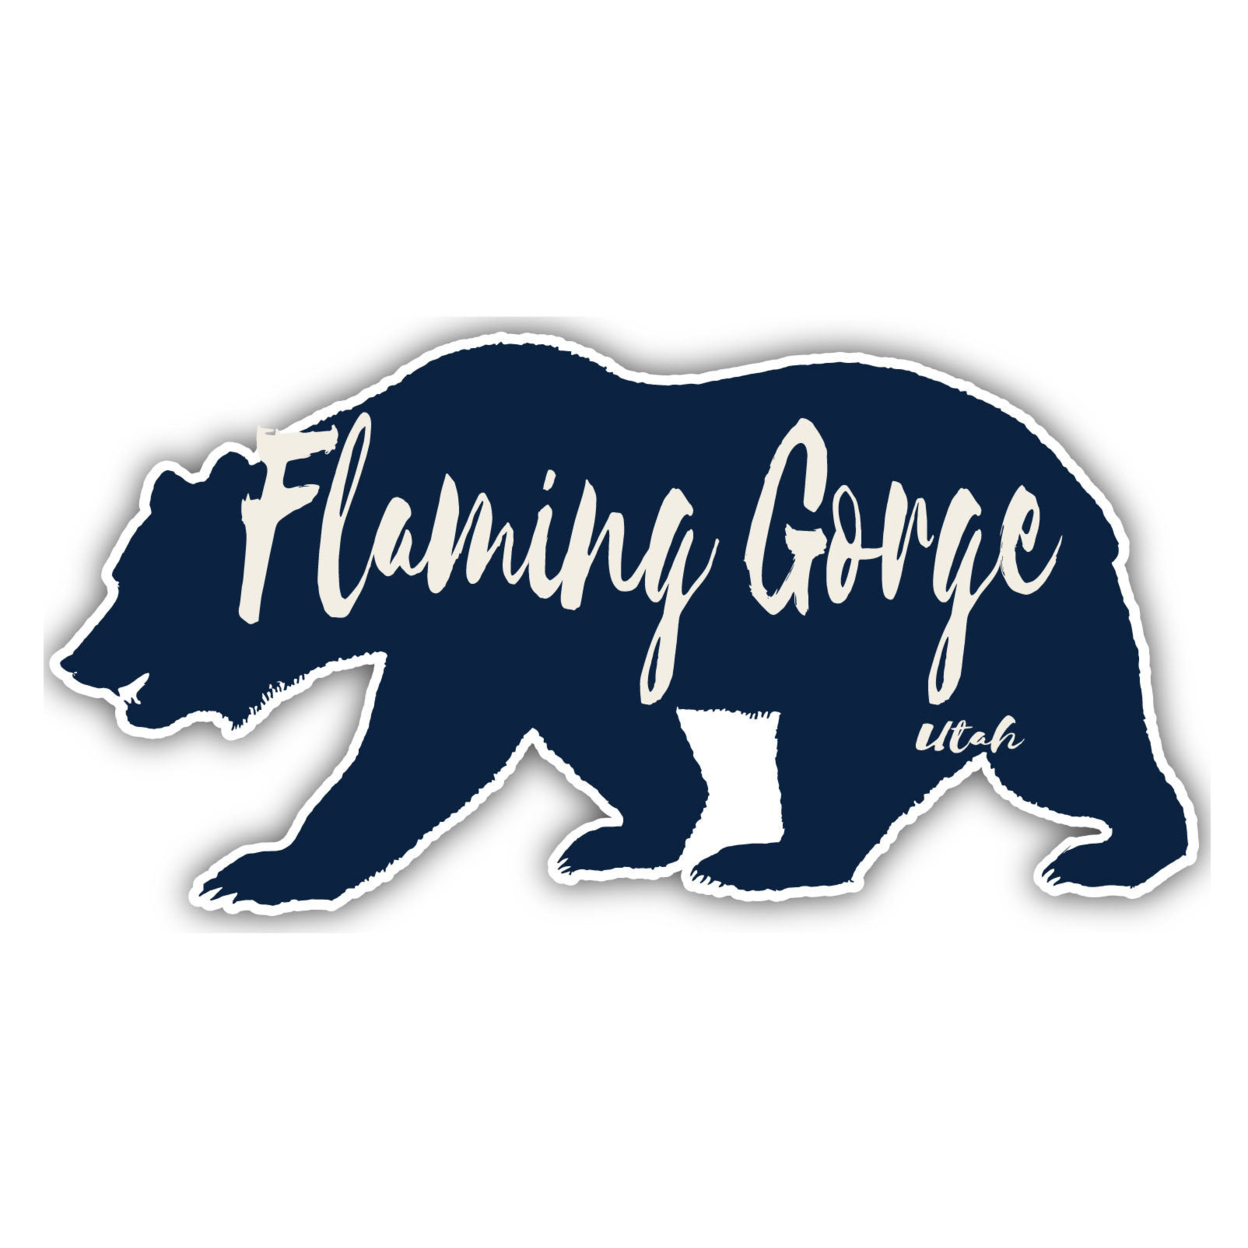 Flaming Gorge Utah Souvenir Decorative Stickers (Choose Theme And Size) - Single Unit, 4-Inch, Bear